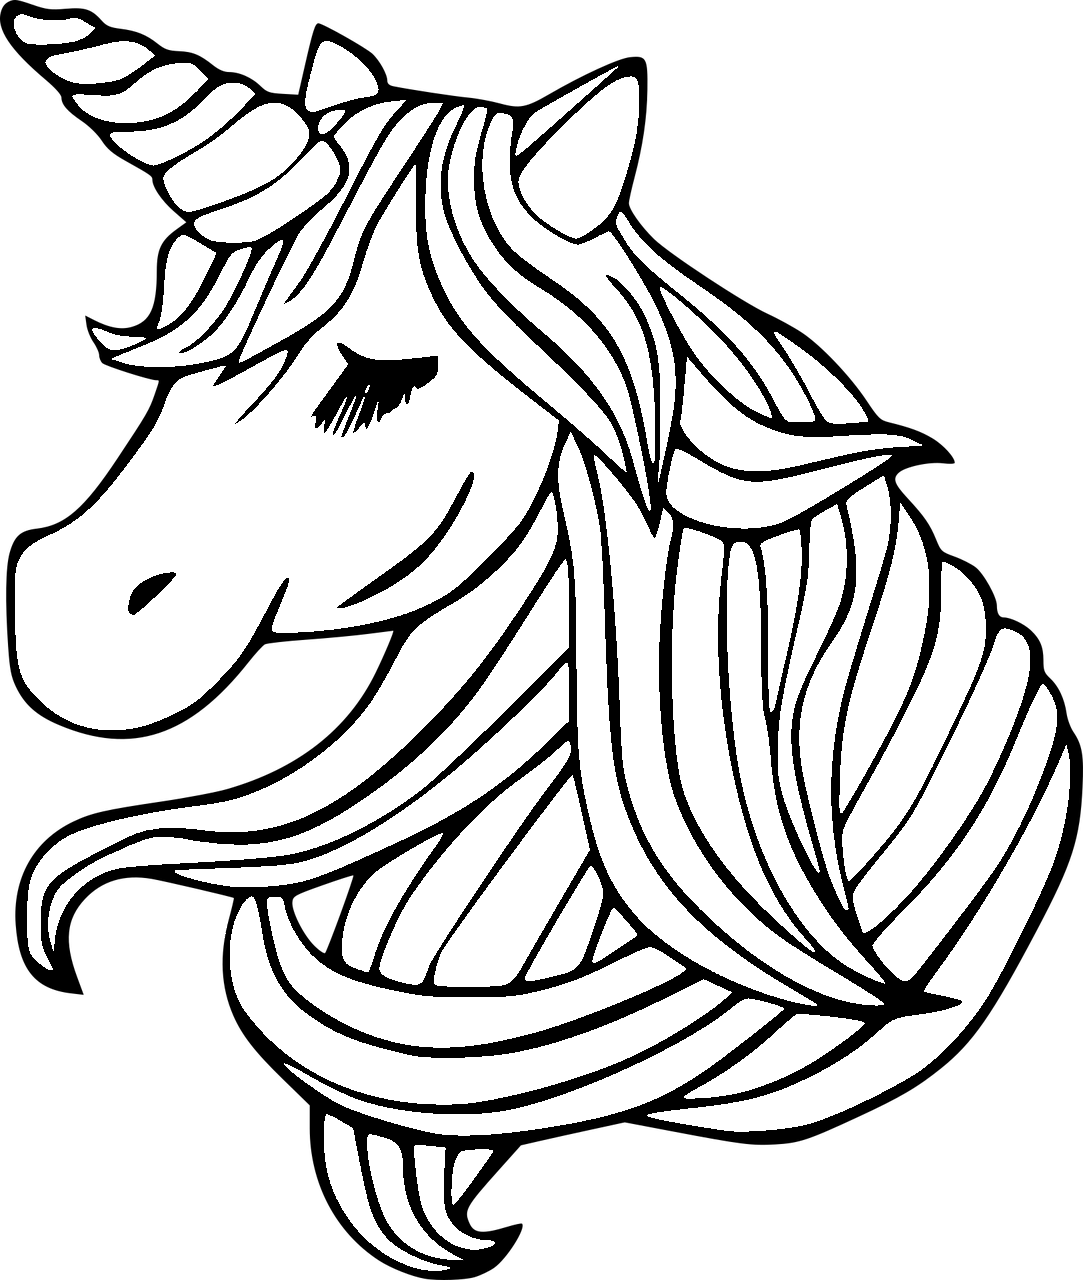 Dibujo de cabeza de unicornio kawaii para colorear